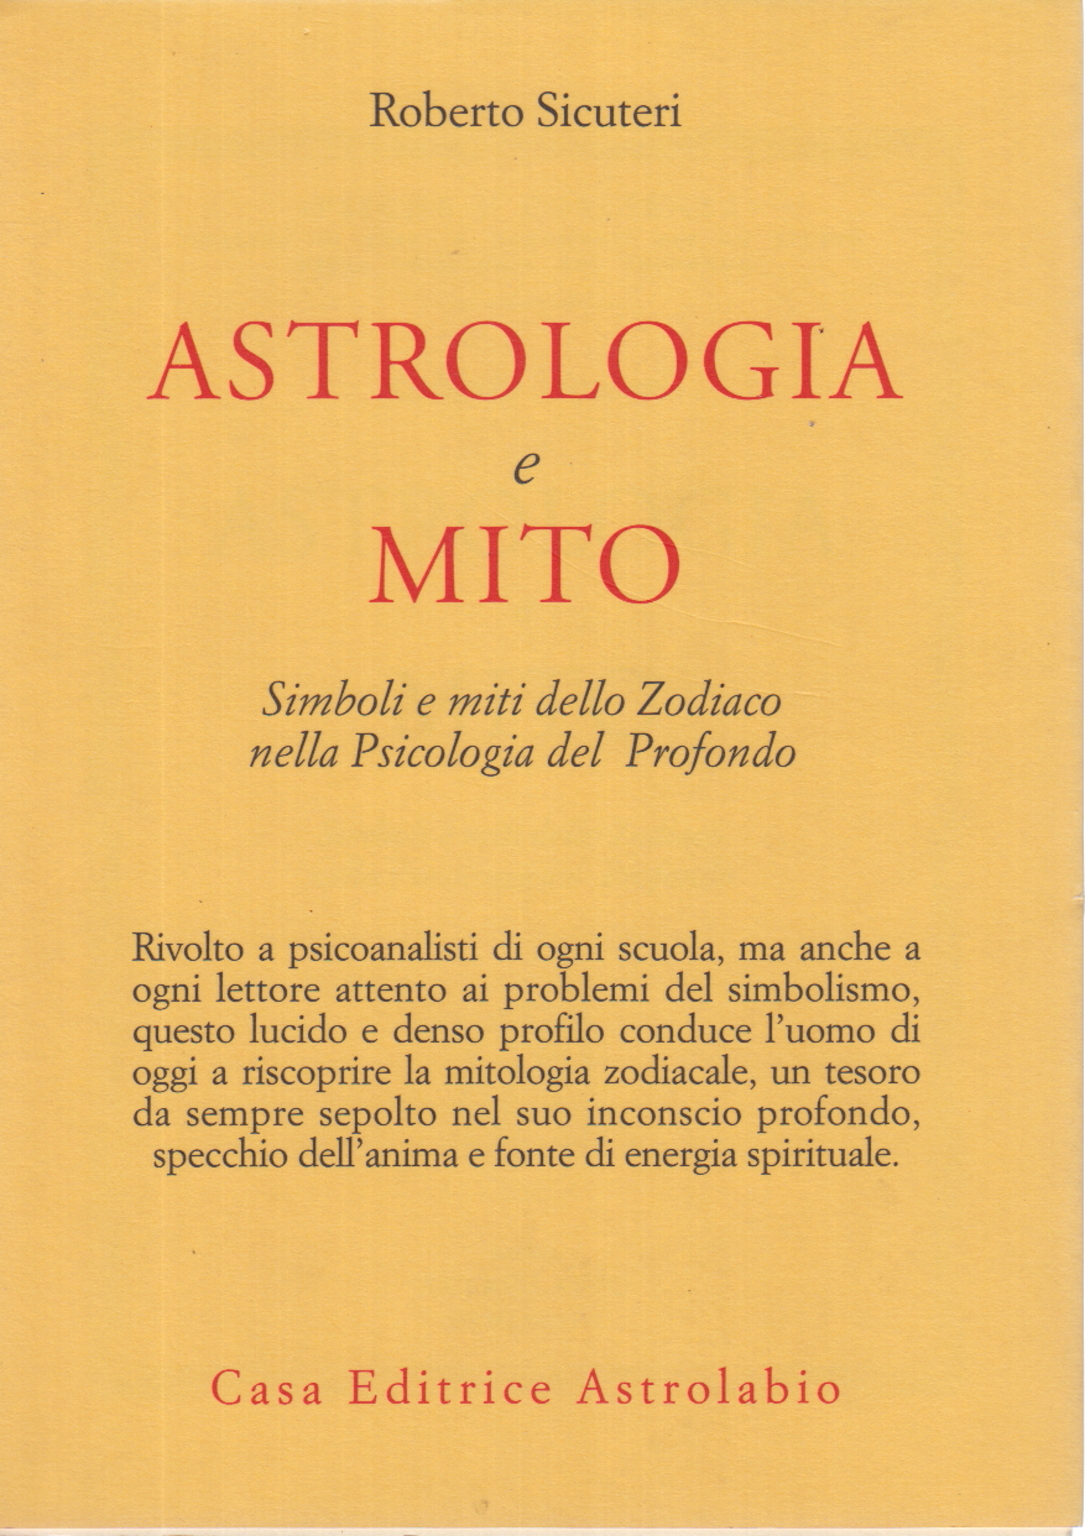 Astrology and myth